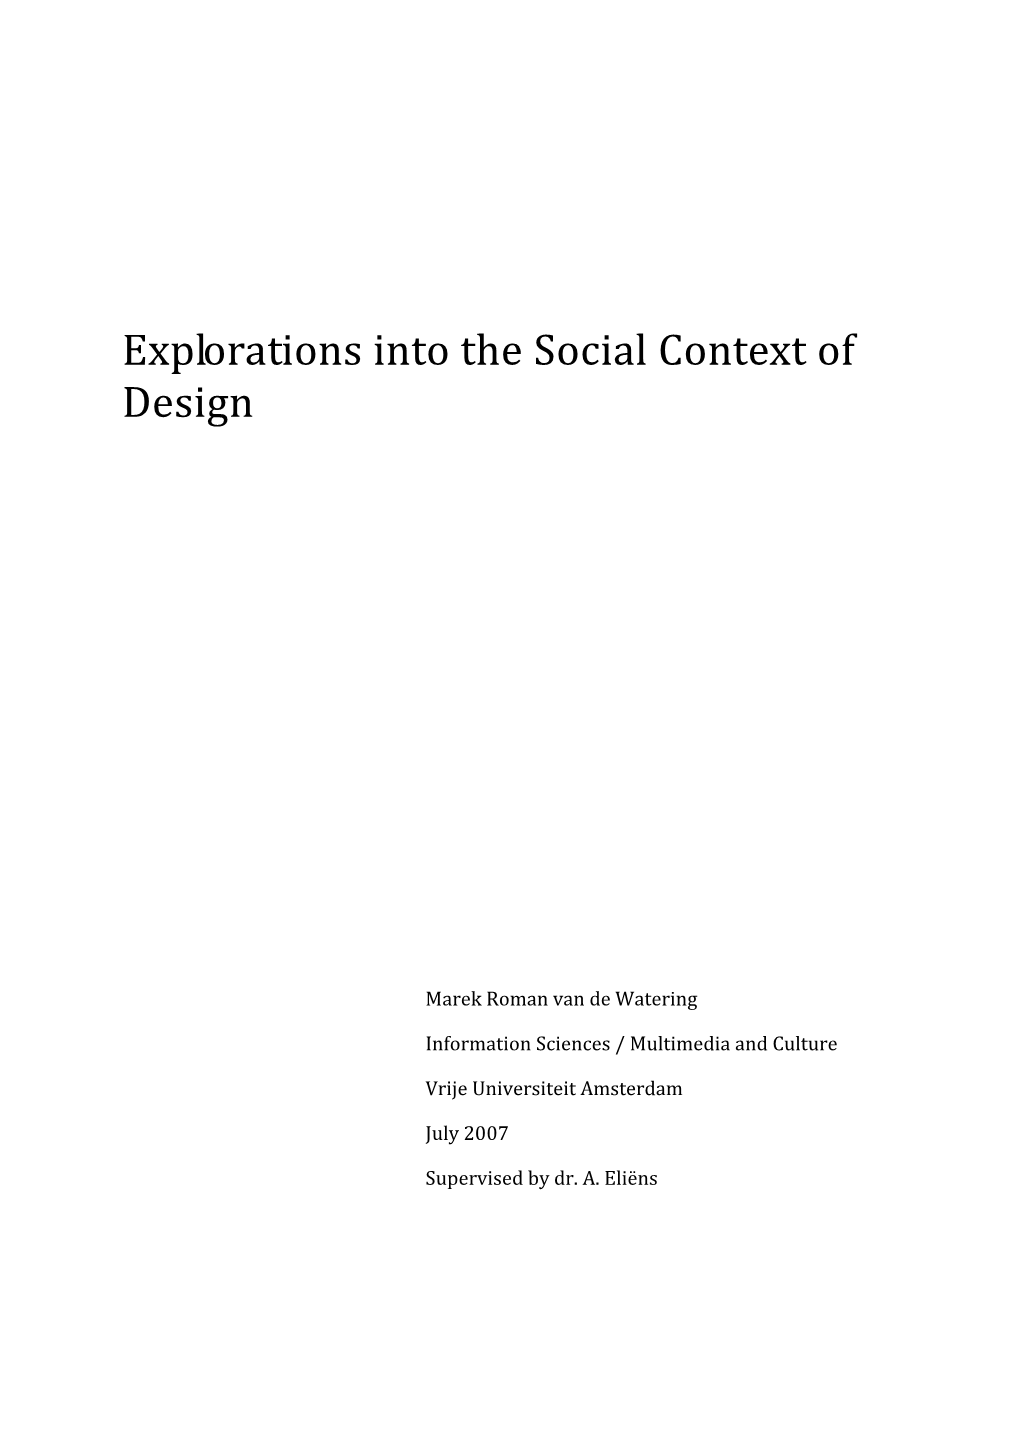 Explorations Into the Social Context of Design